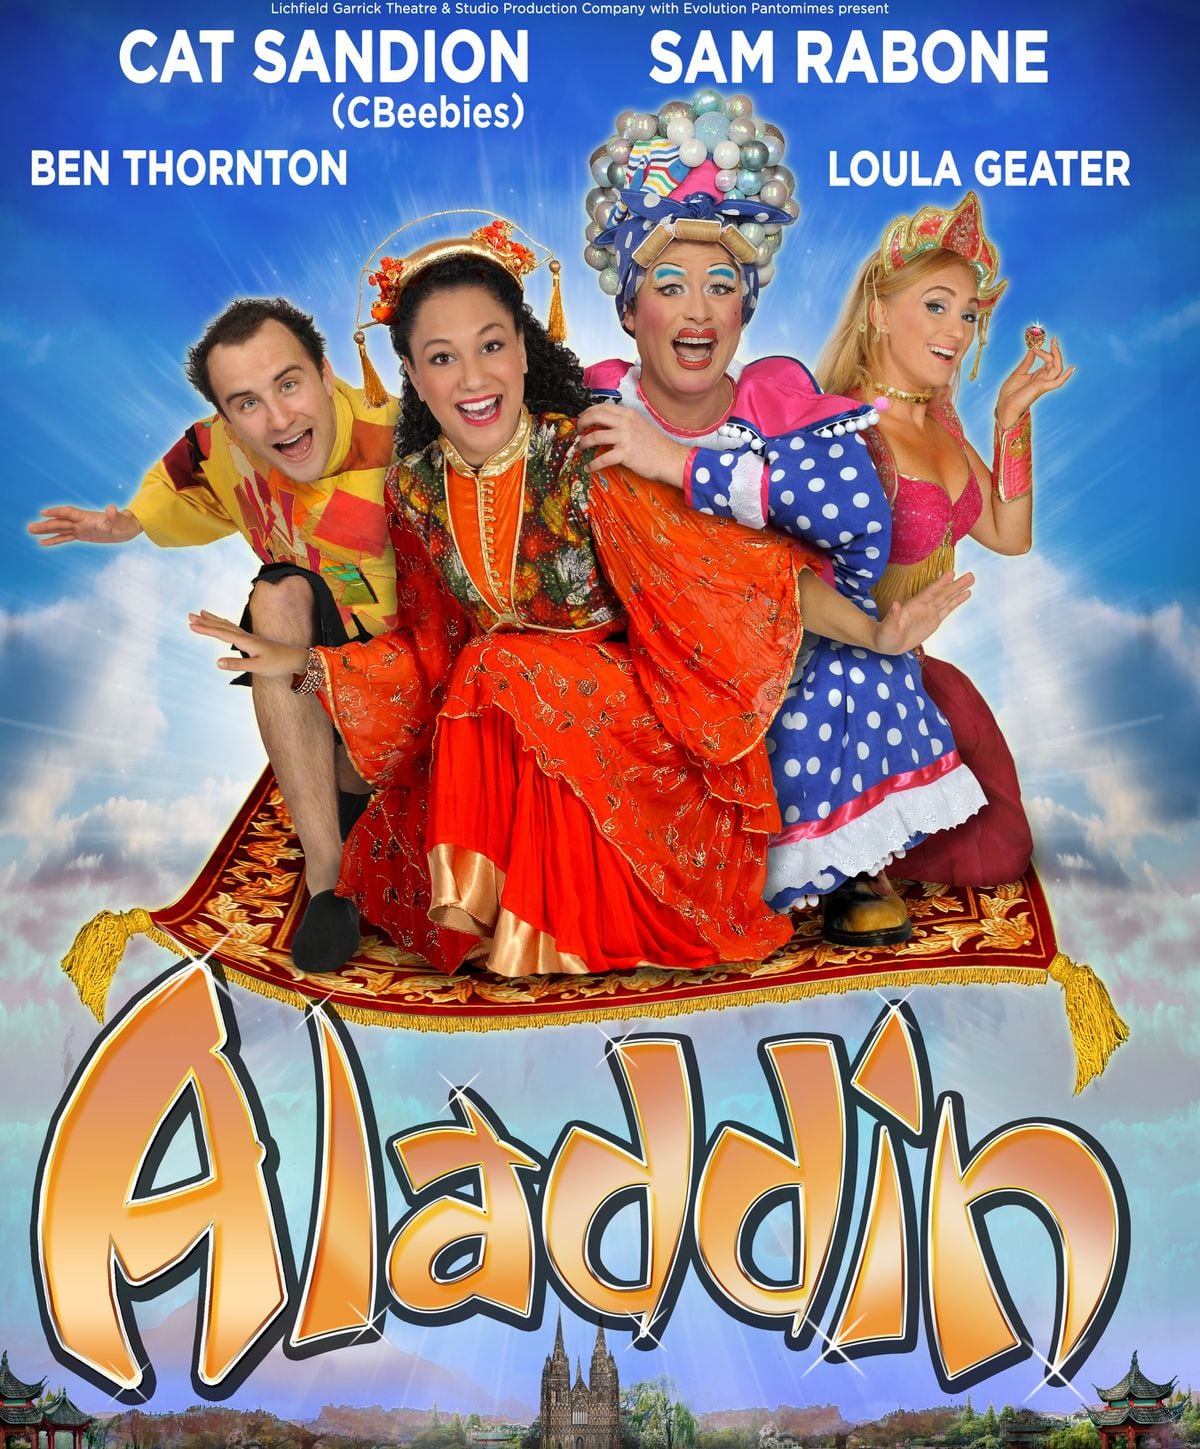 CBeebies Cat Sandion to star in Lichfield Garrick's Aladdin Express